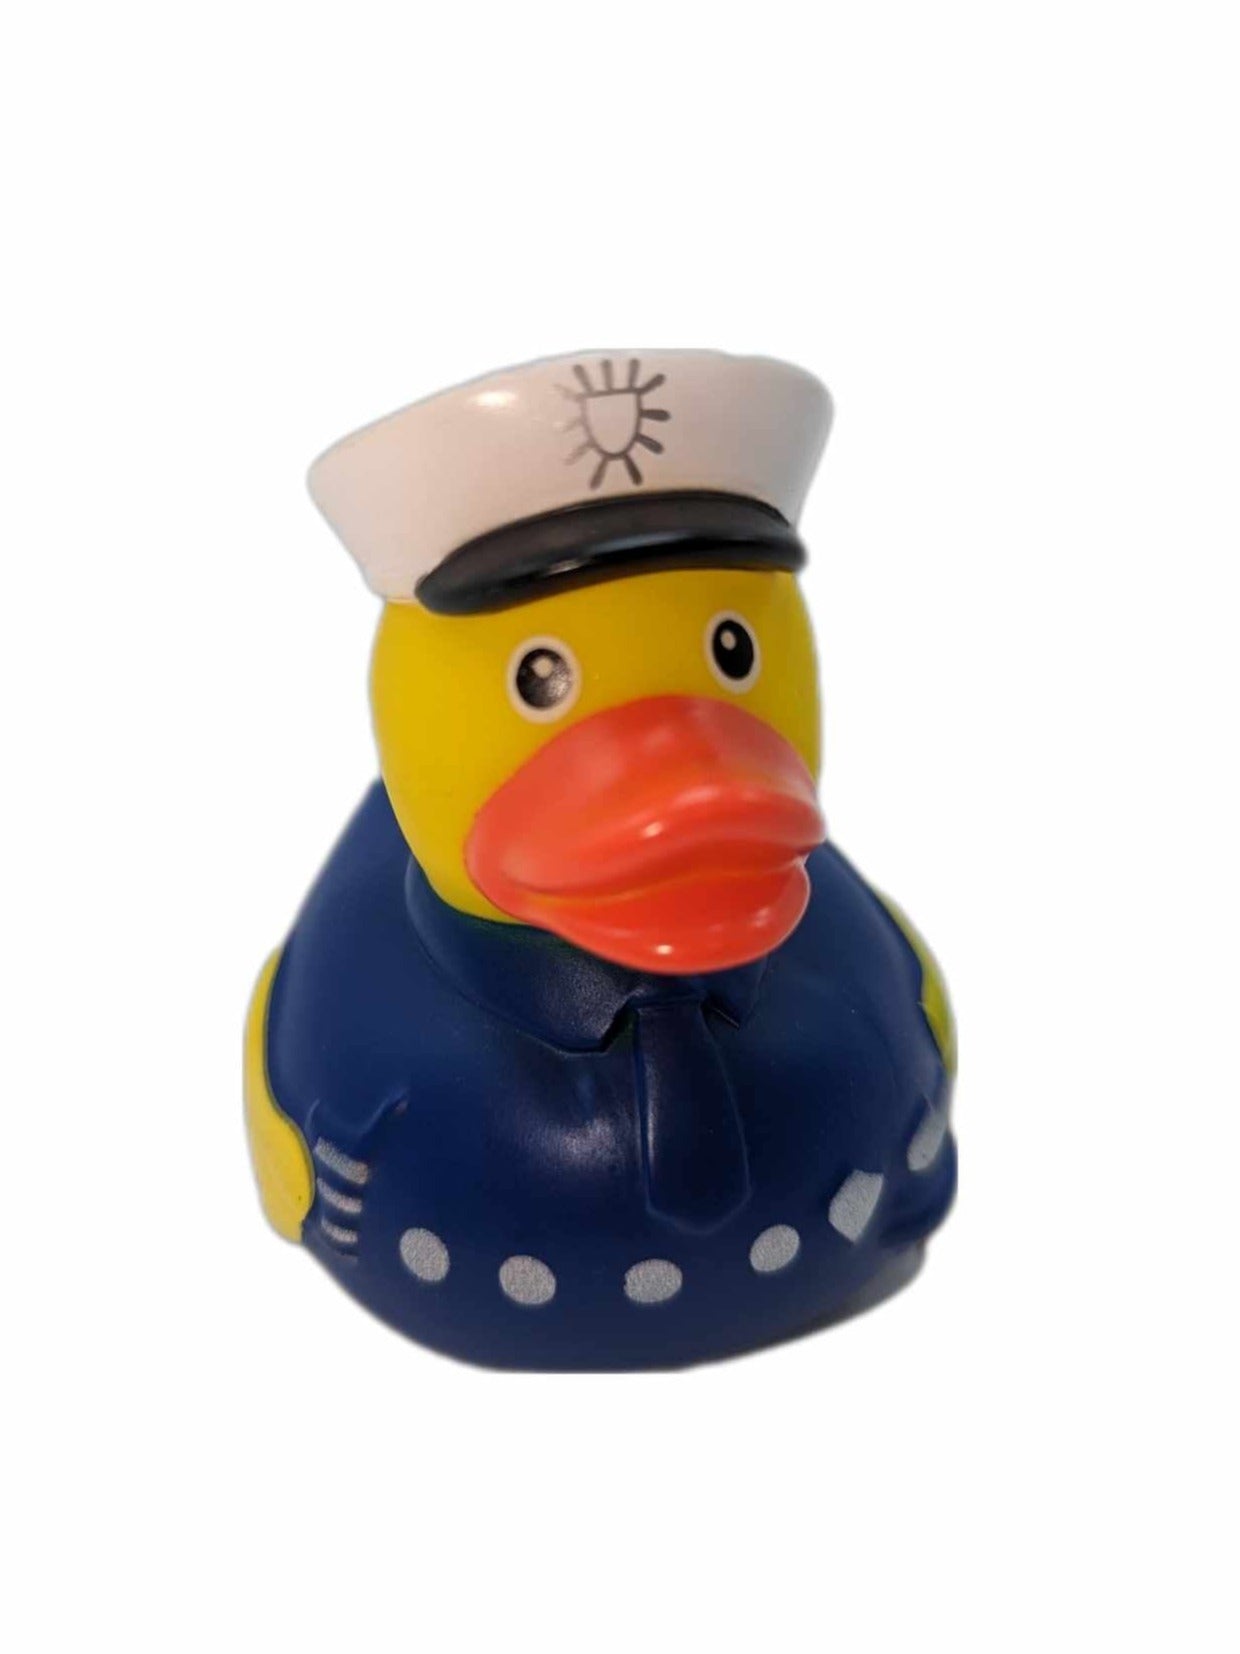 Policeman 4" Rubber Duck